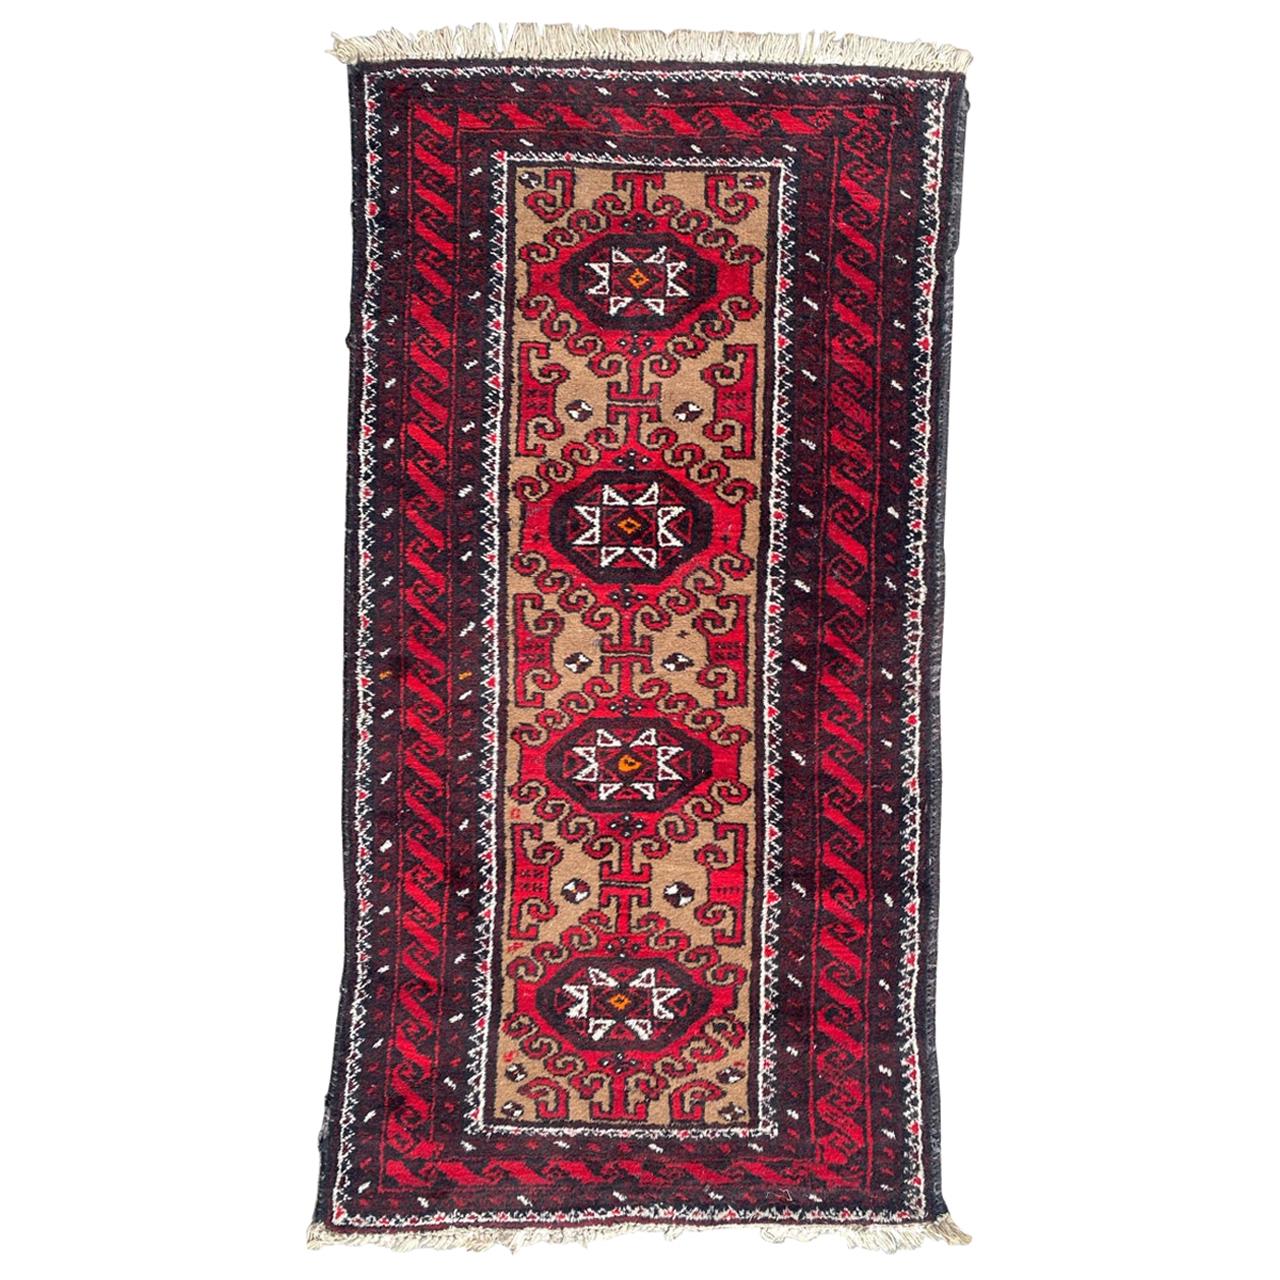 Le joli tapis Baluch vintage de Bobyrug en vente